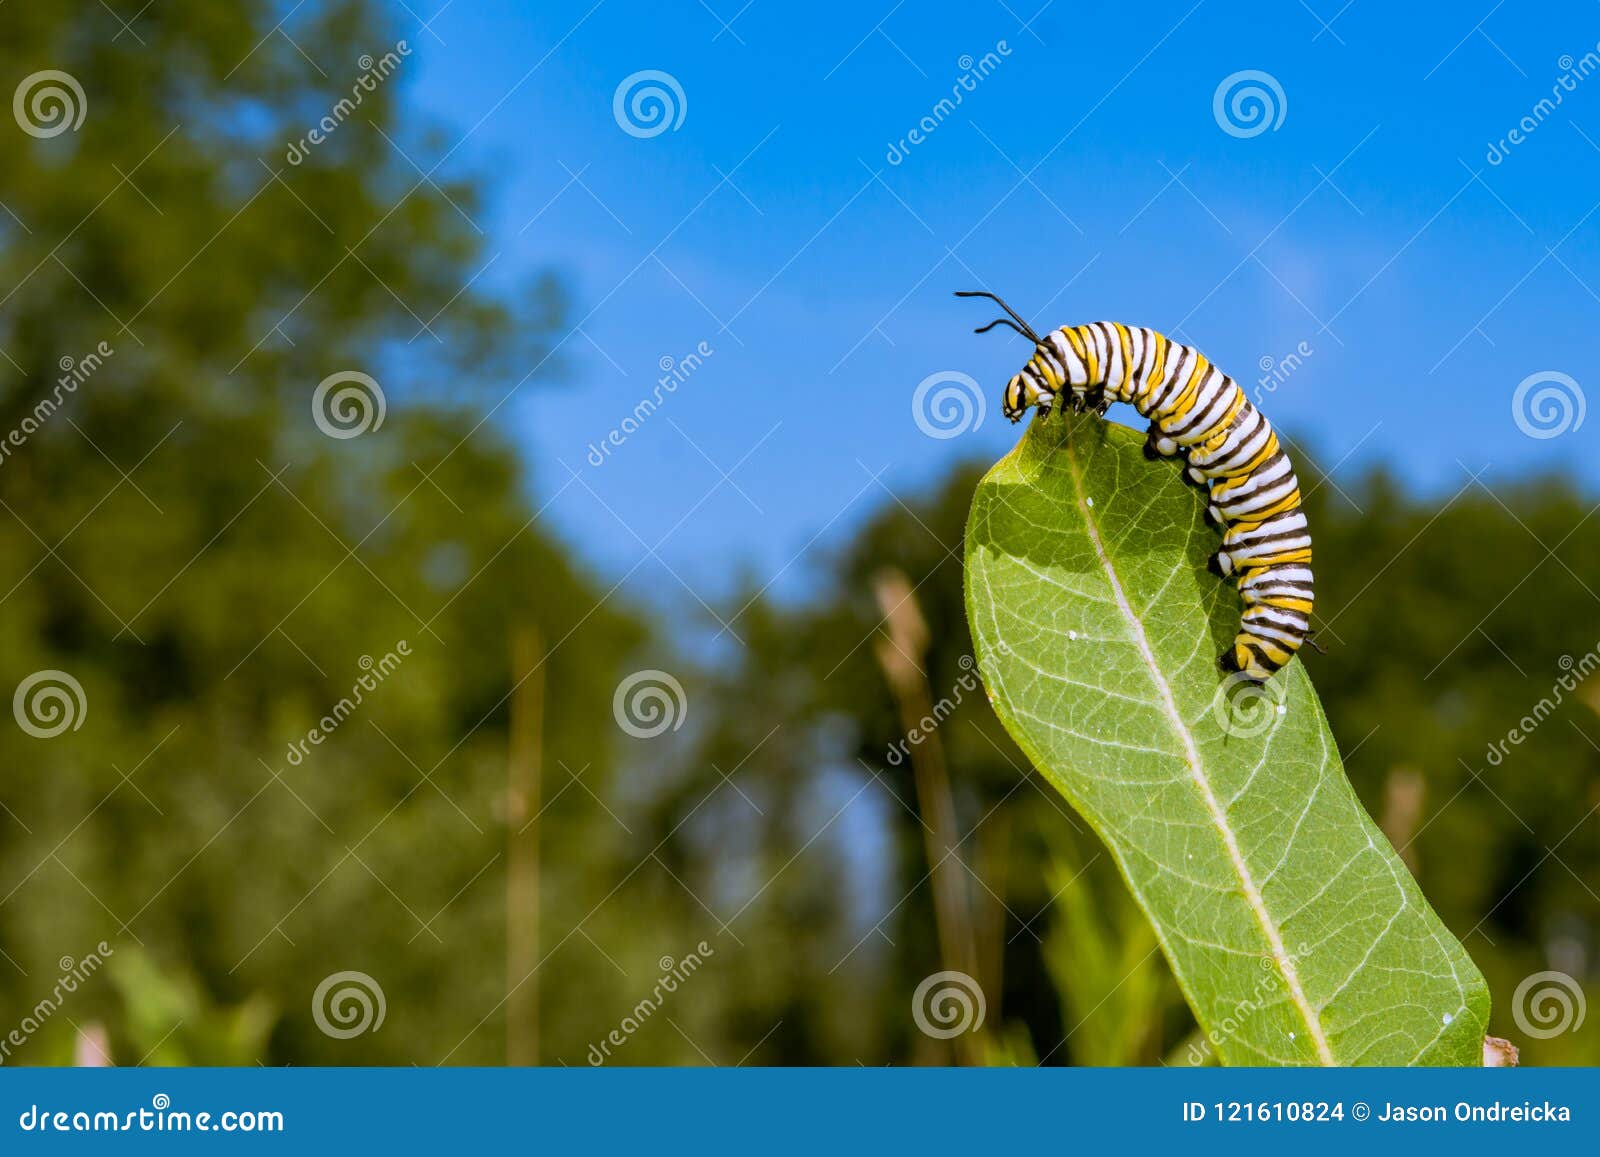 monarch butterfly caterpillar eating milkweed.